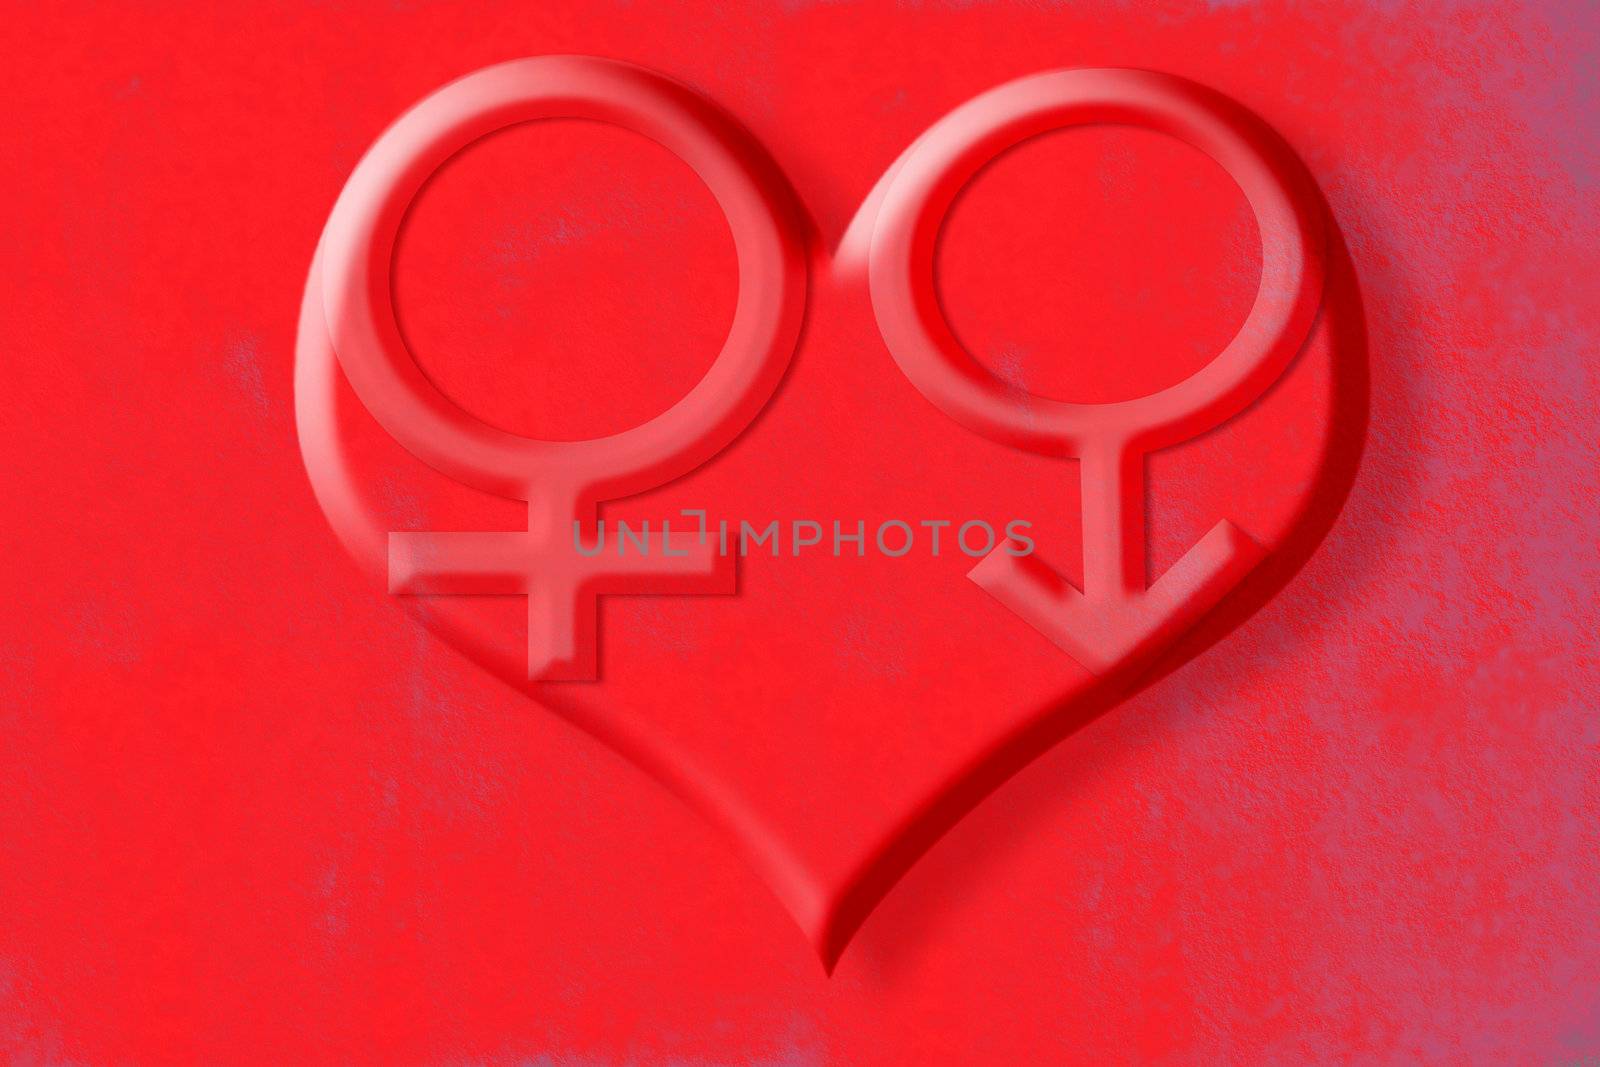 male female symbols hearts background